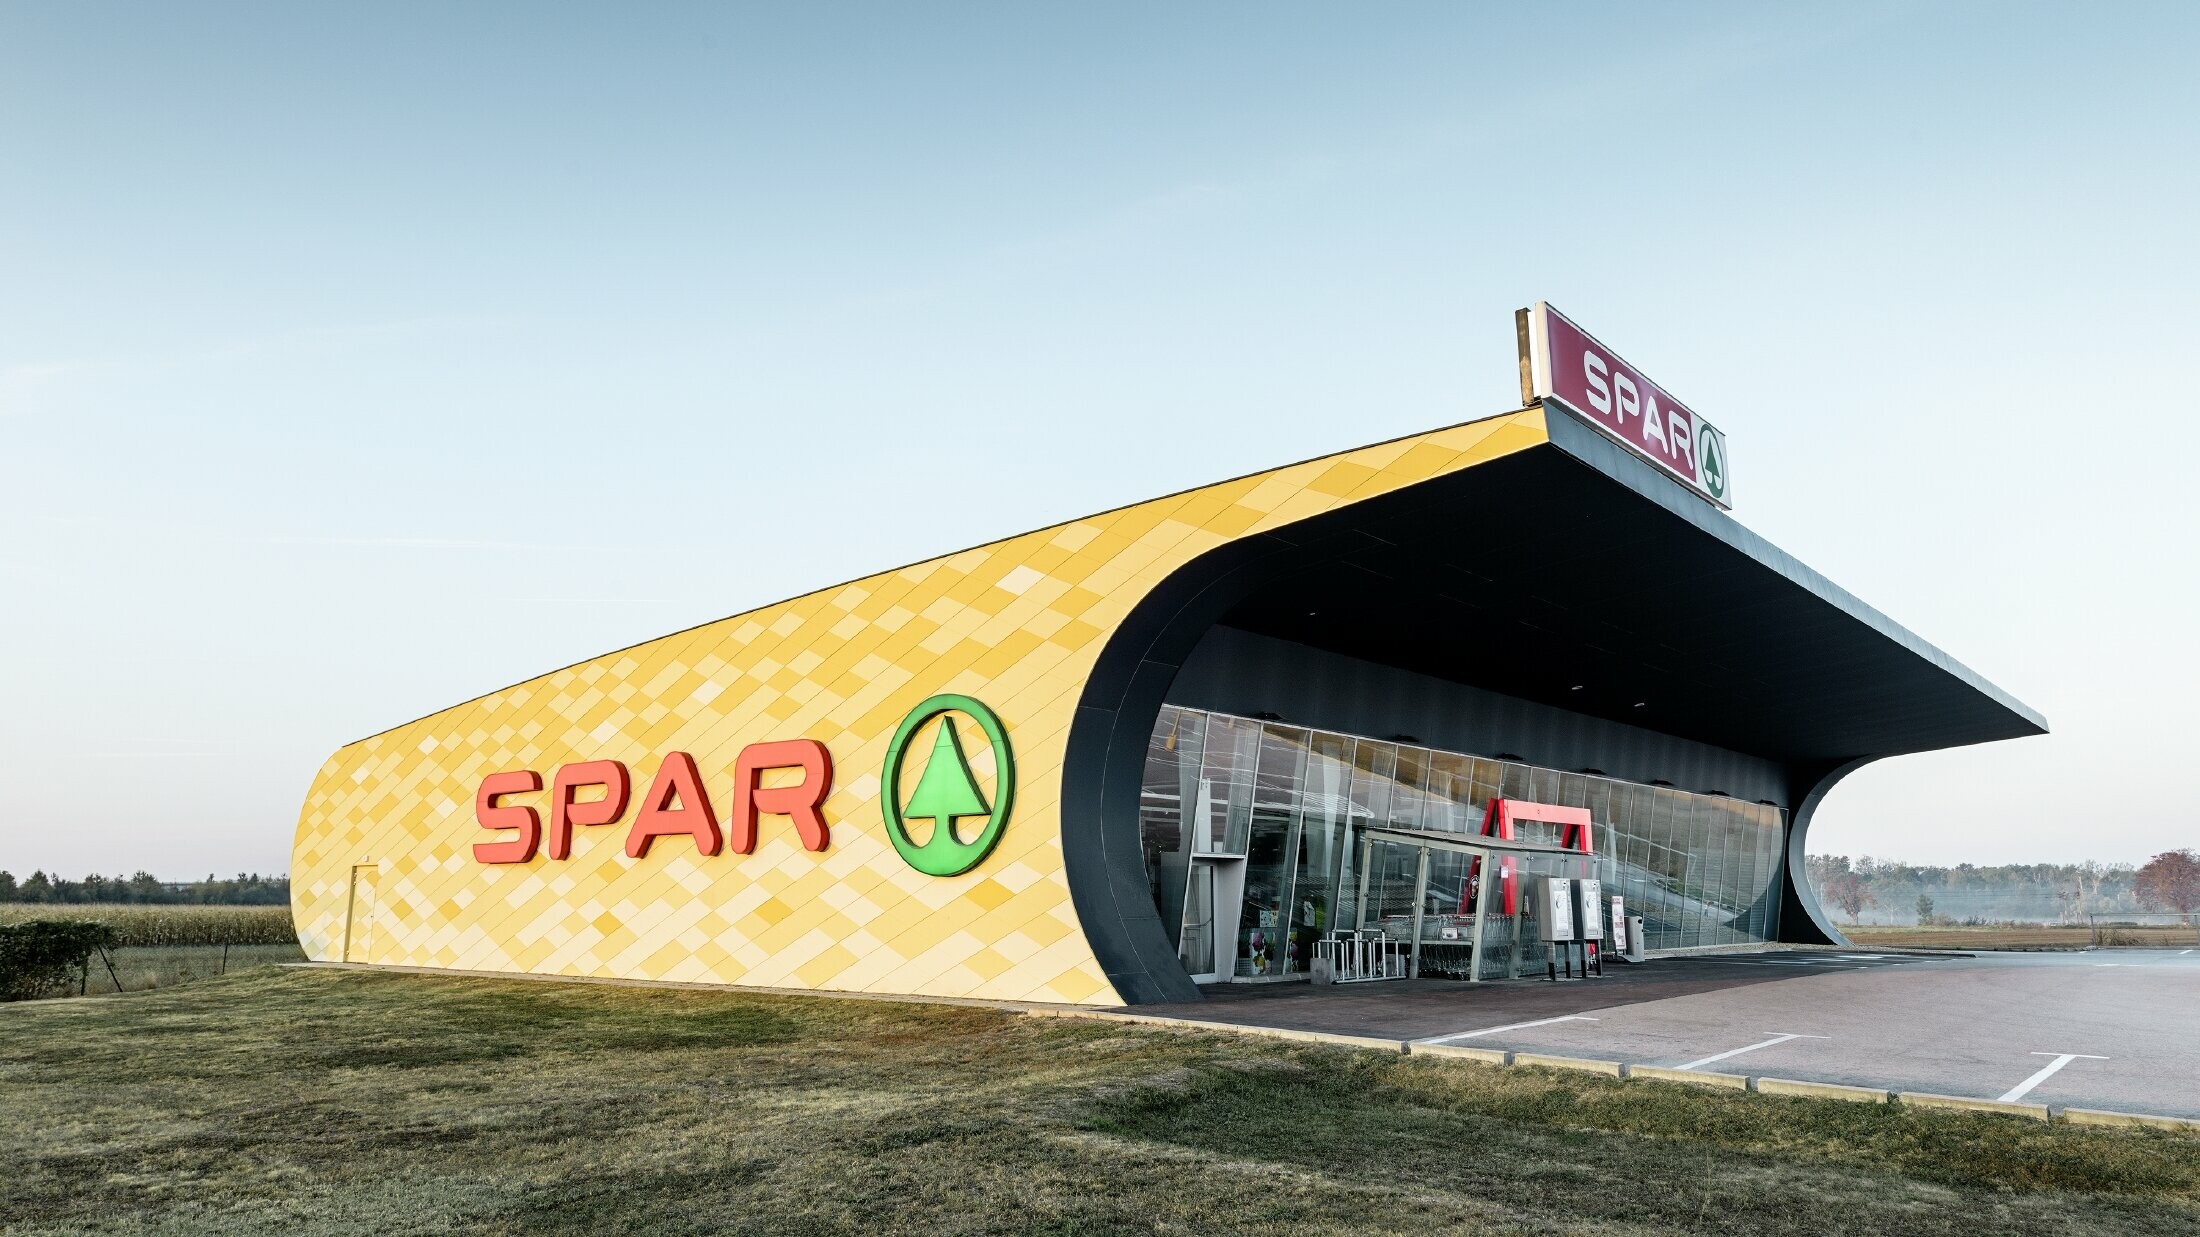 Spar-supermarkt met aluminiumgevel in ruitvormige, geel-oranje composietplaten en Spar-logo